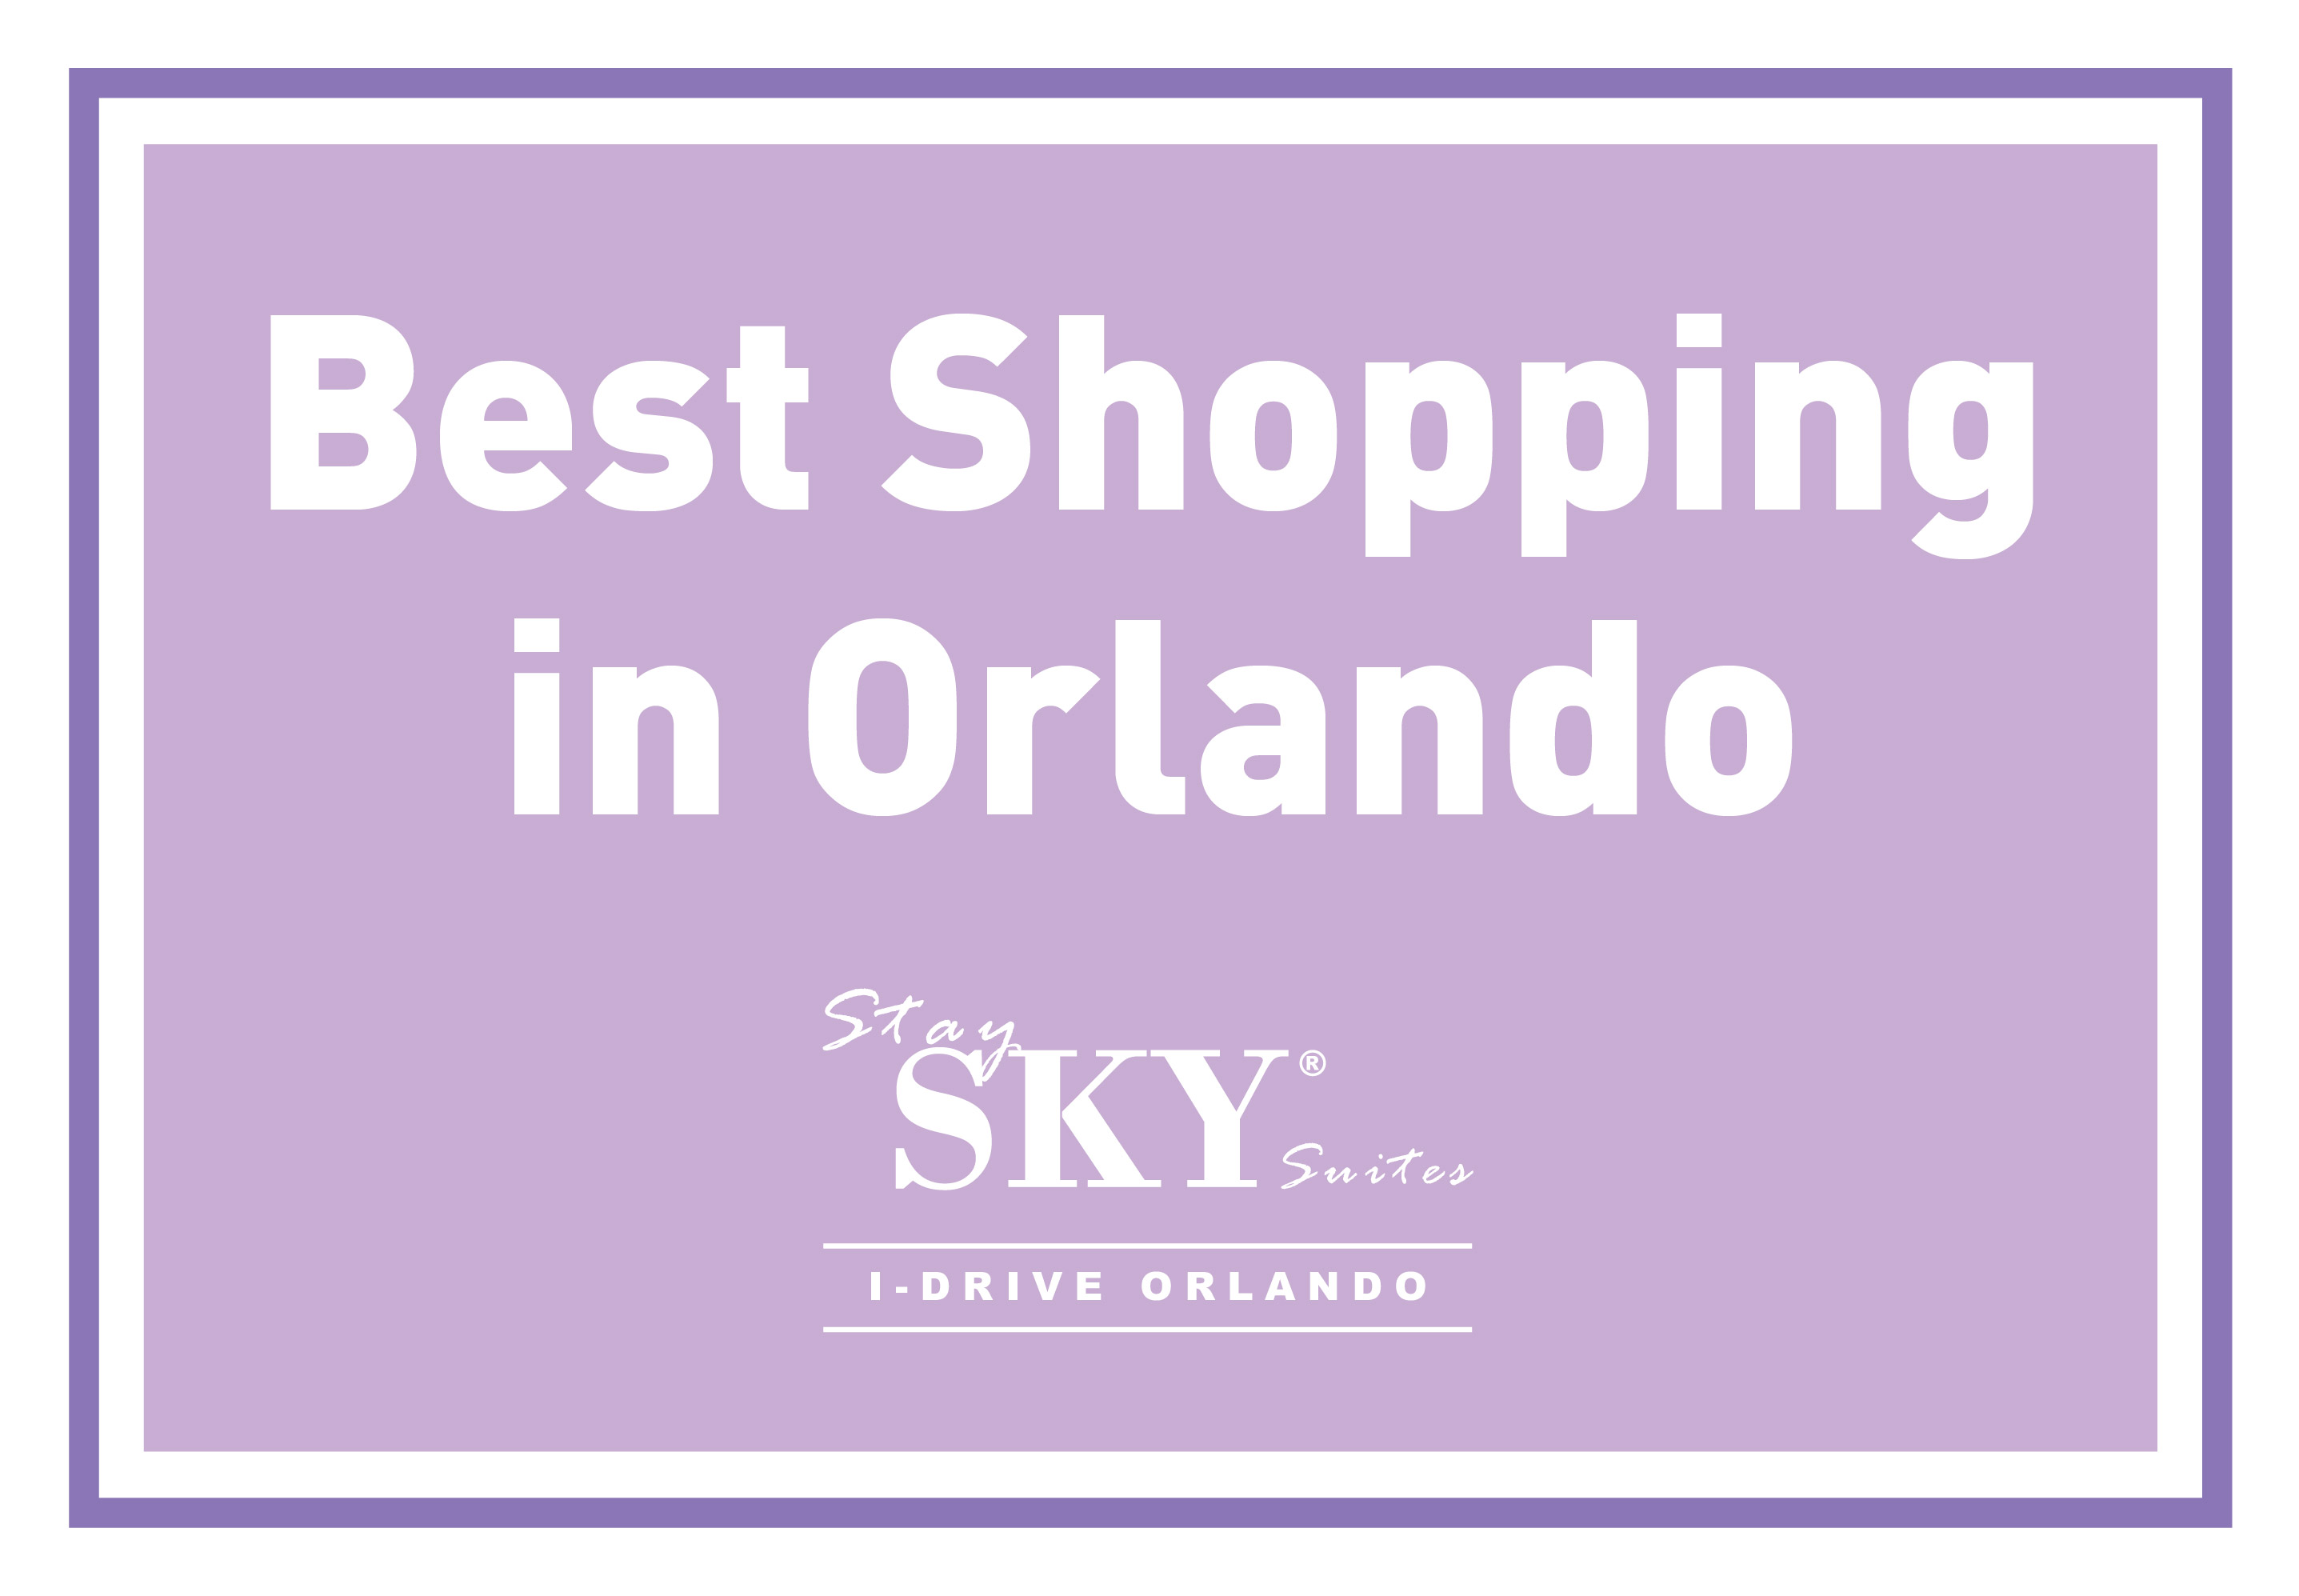 StaySky Suites I - Drive - Orlando Resorts - Shopping